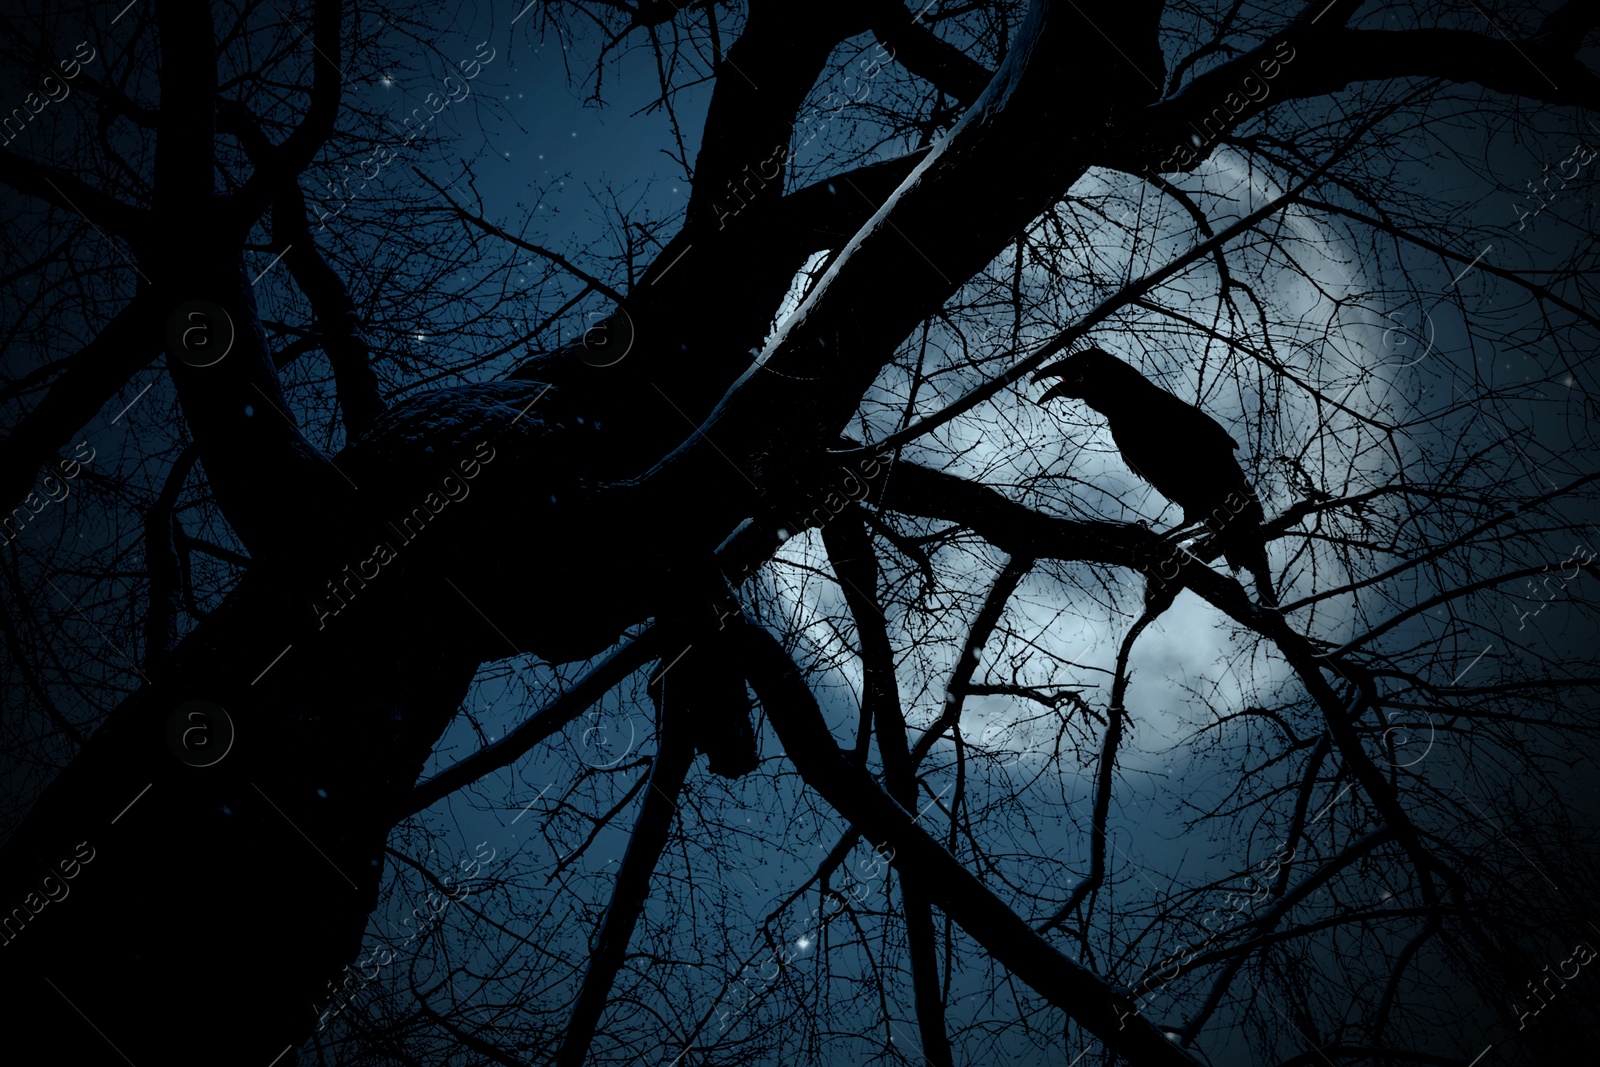 Image of Creepy black crow croaking on tree branch under full moon at night